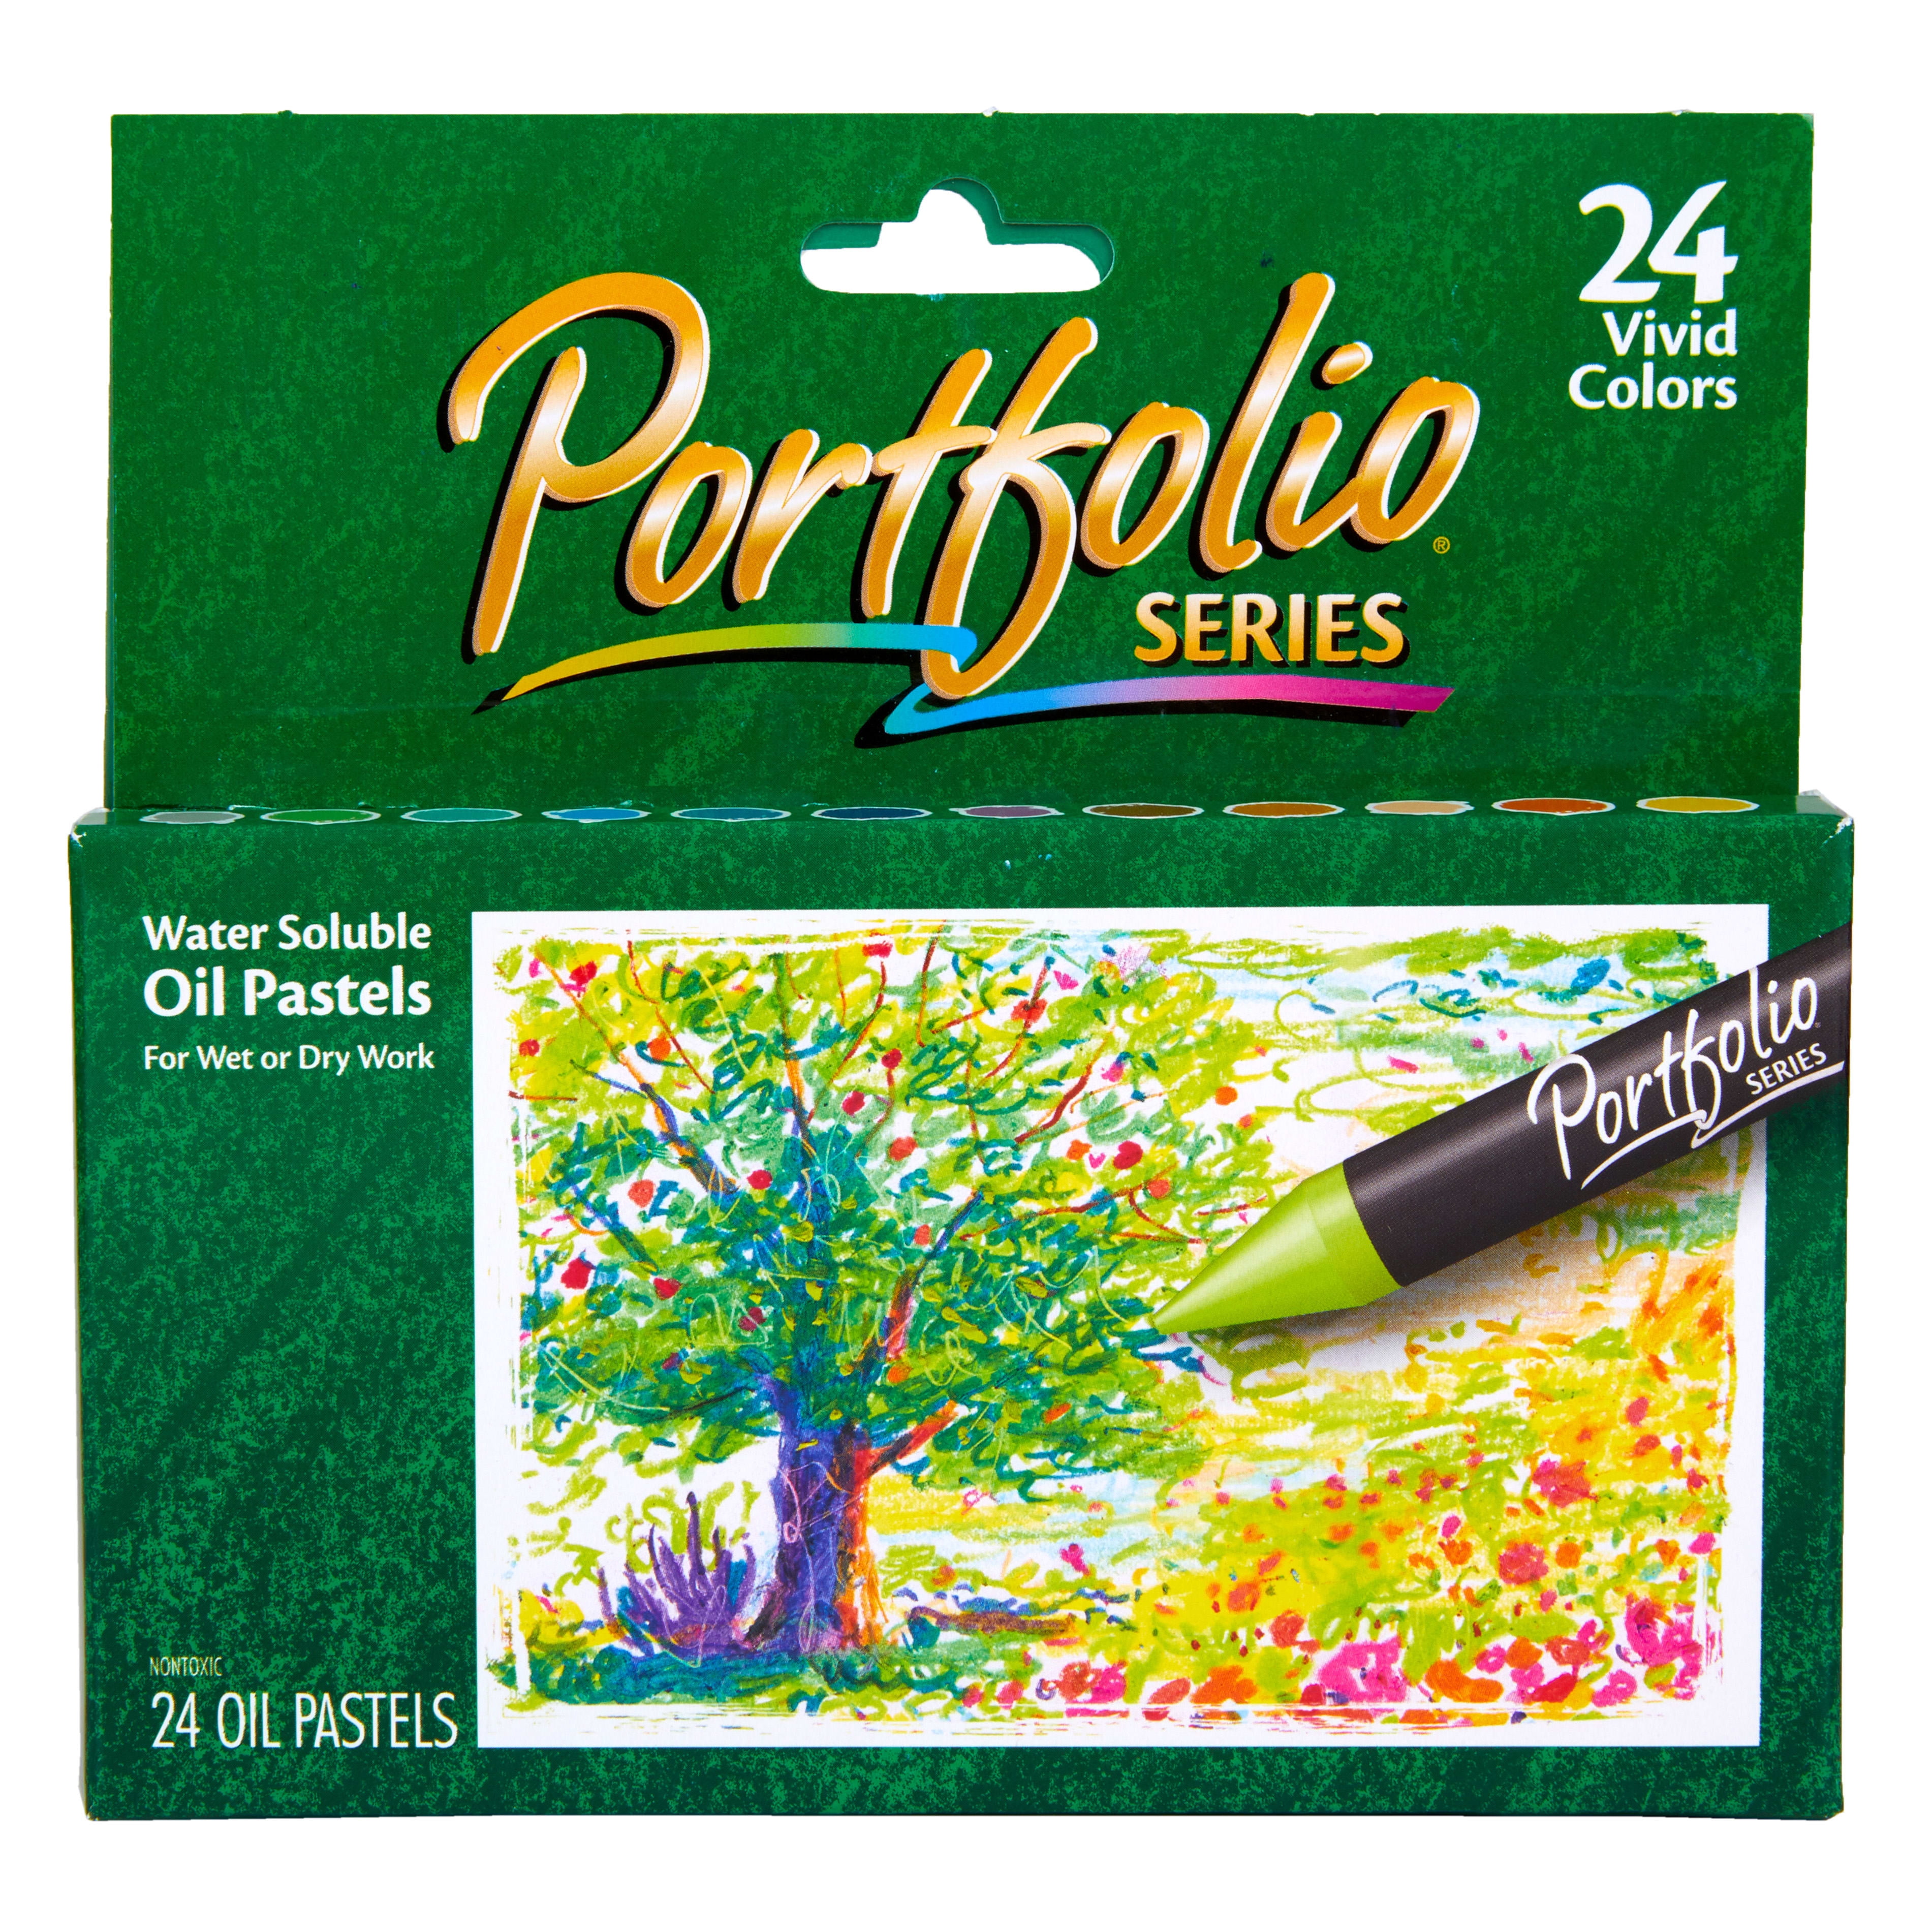 Faber-Castell Oil Pastel Crayons – 12 Vibrant Colors – Beginner Oil Pastel  Set